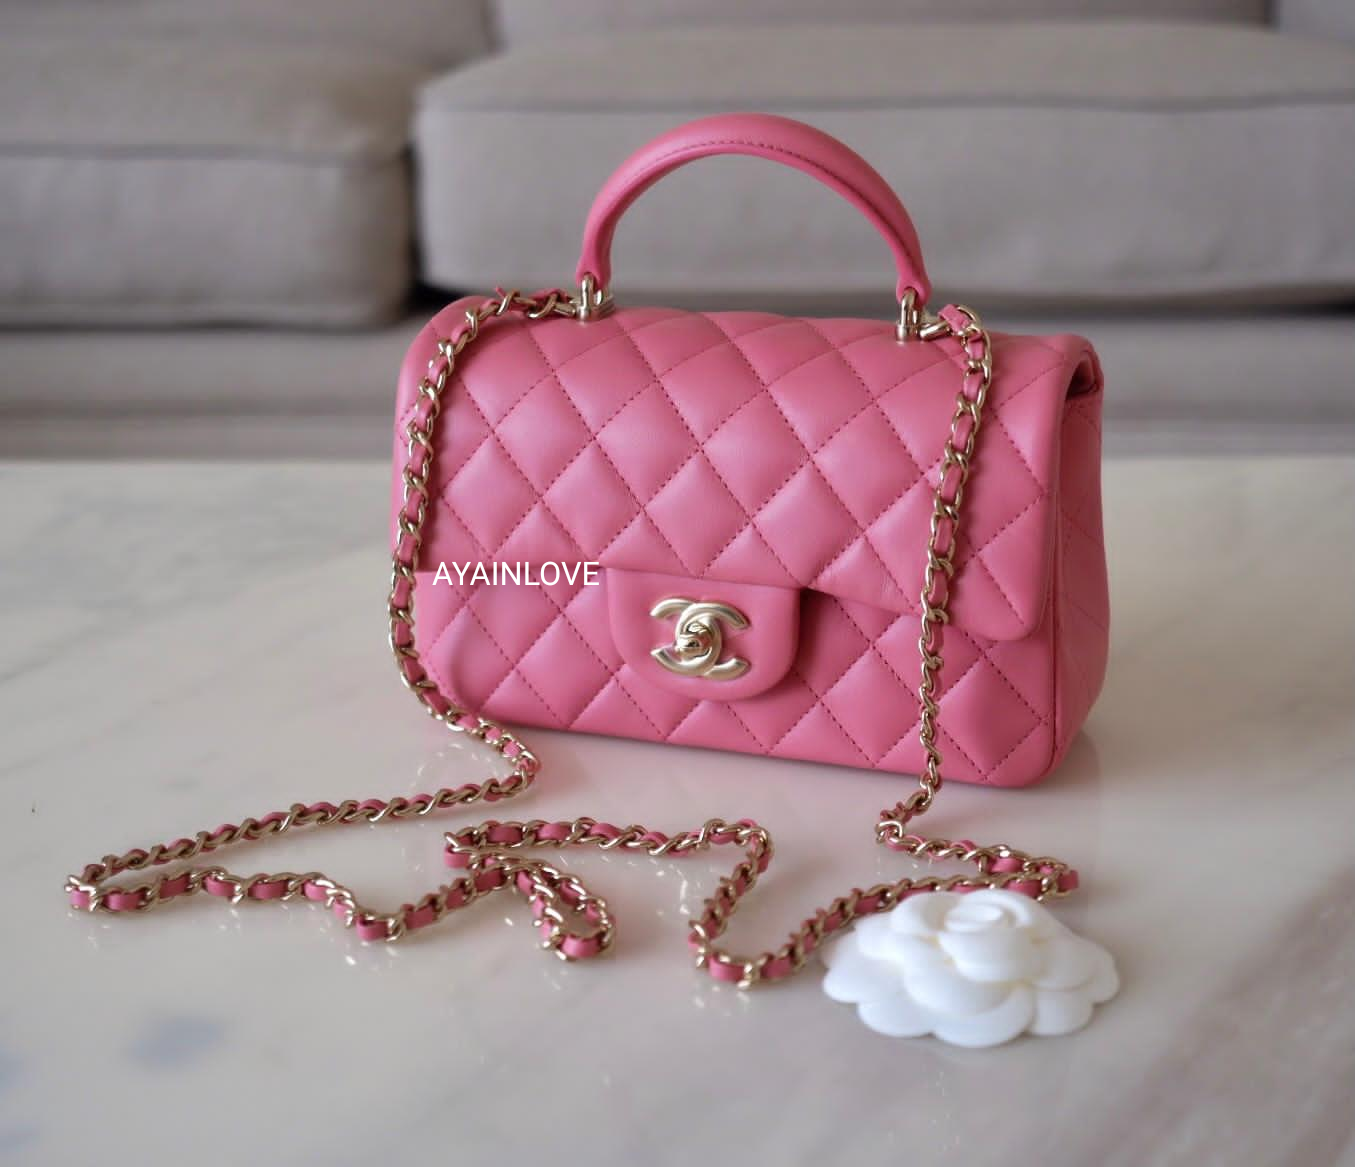 Chanel Pink Purses